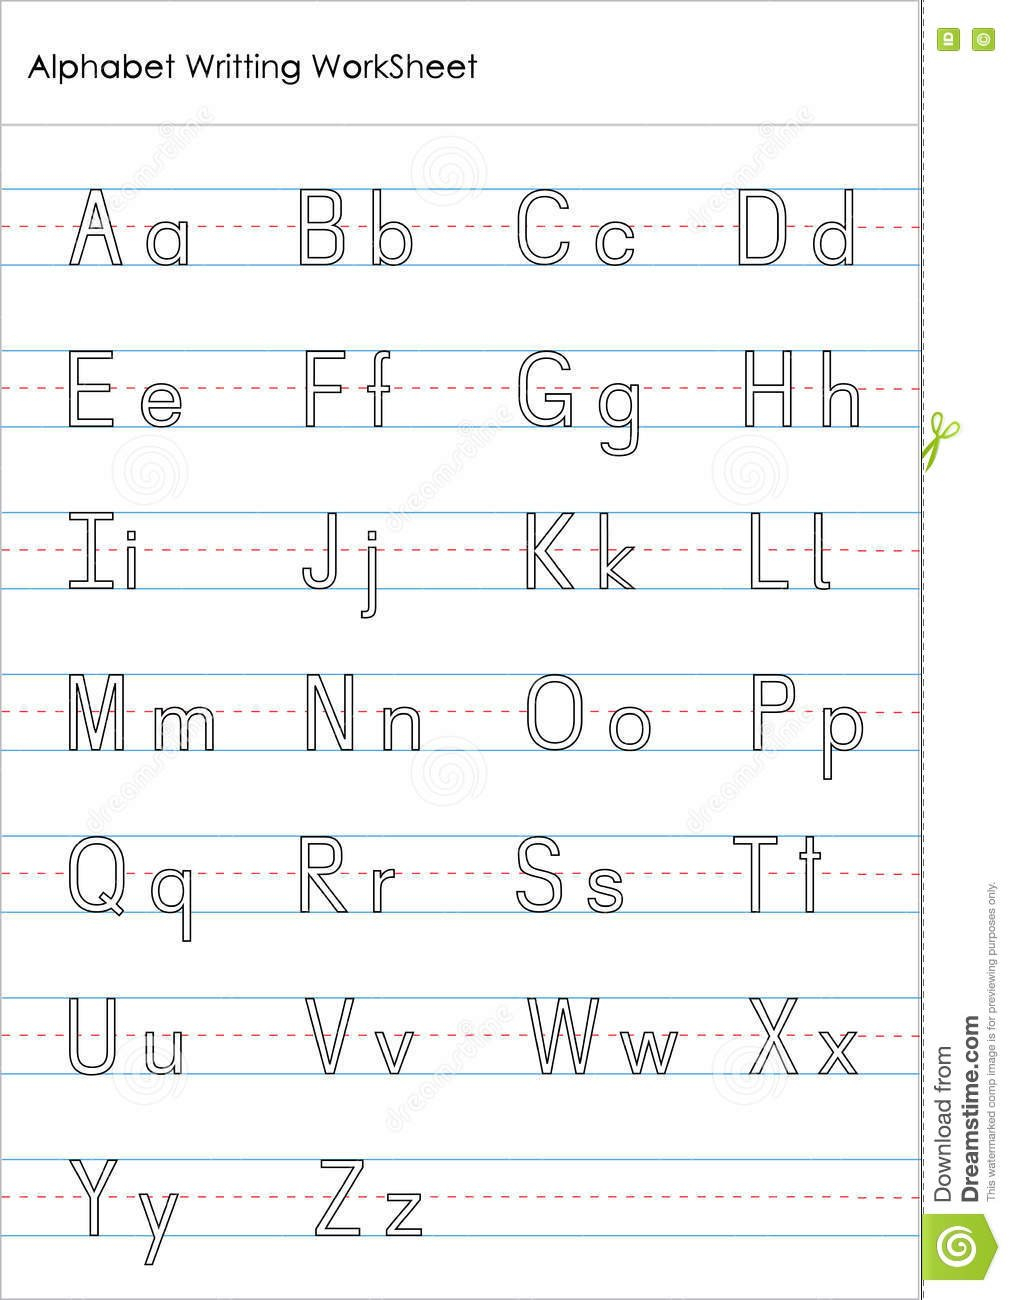 Alphabet Writing Practice Worksheet Stock Illustration And Kindergarten Practice Worksheets